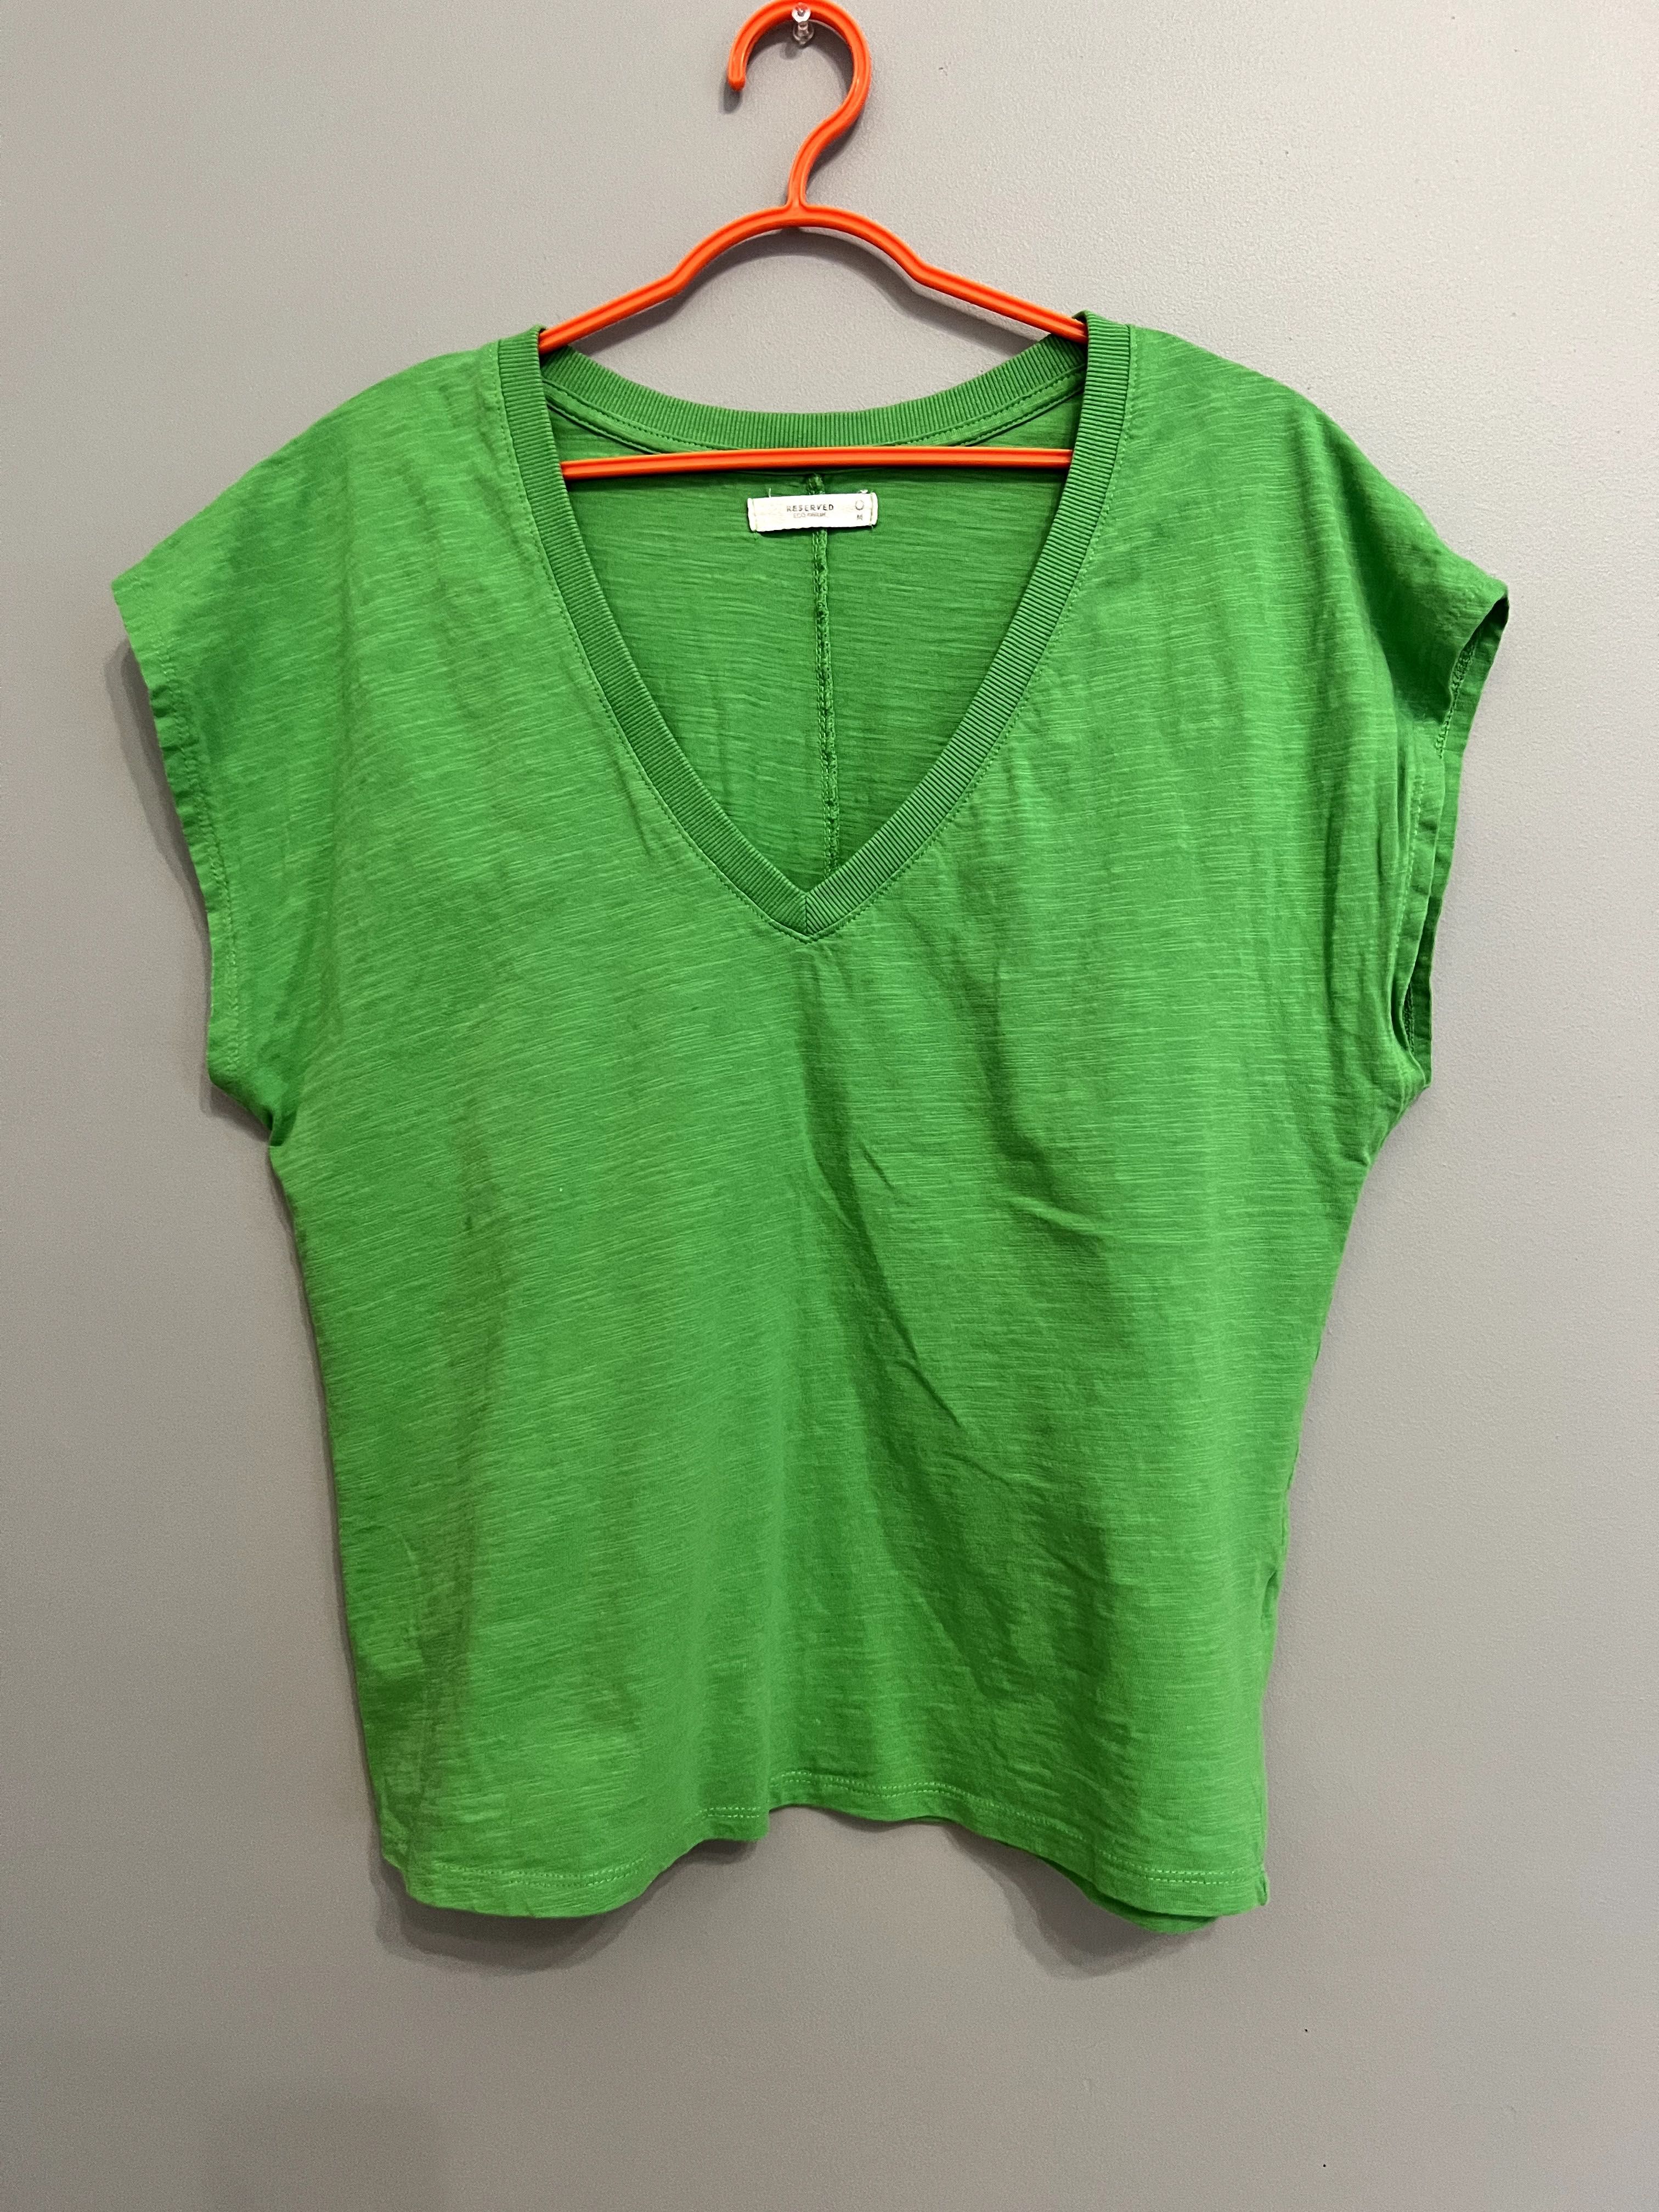 RESERVED damska bluzka koszulka zielona M